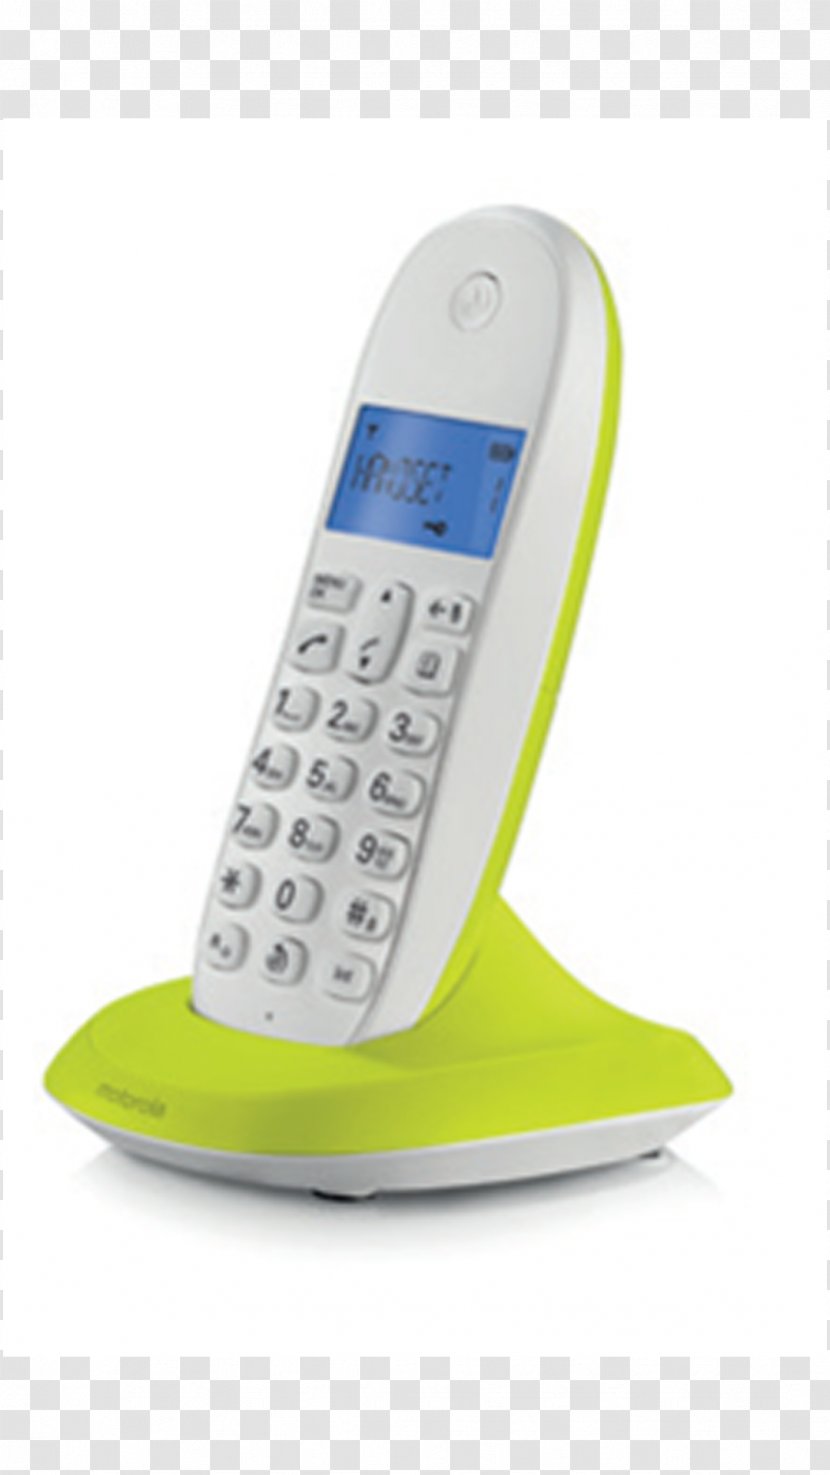 Cordless Telephone Home & Business Phones Mobile Digital Enhanced Telecommunications - Motorola Transparent PNG